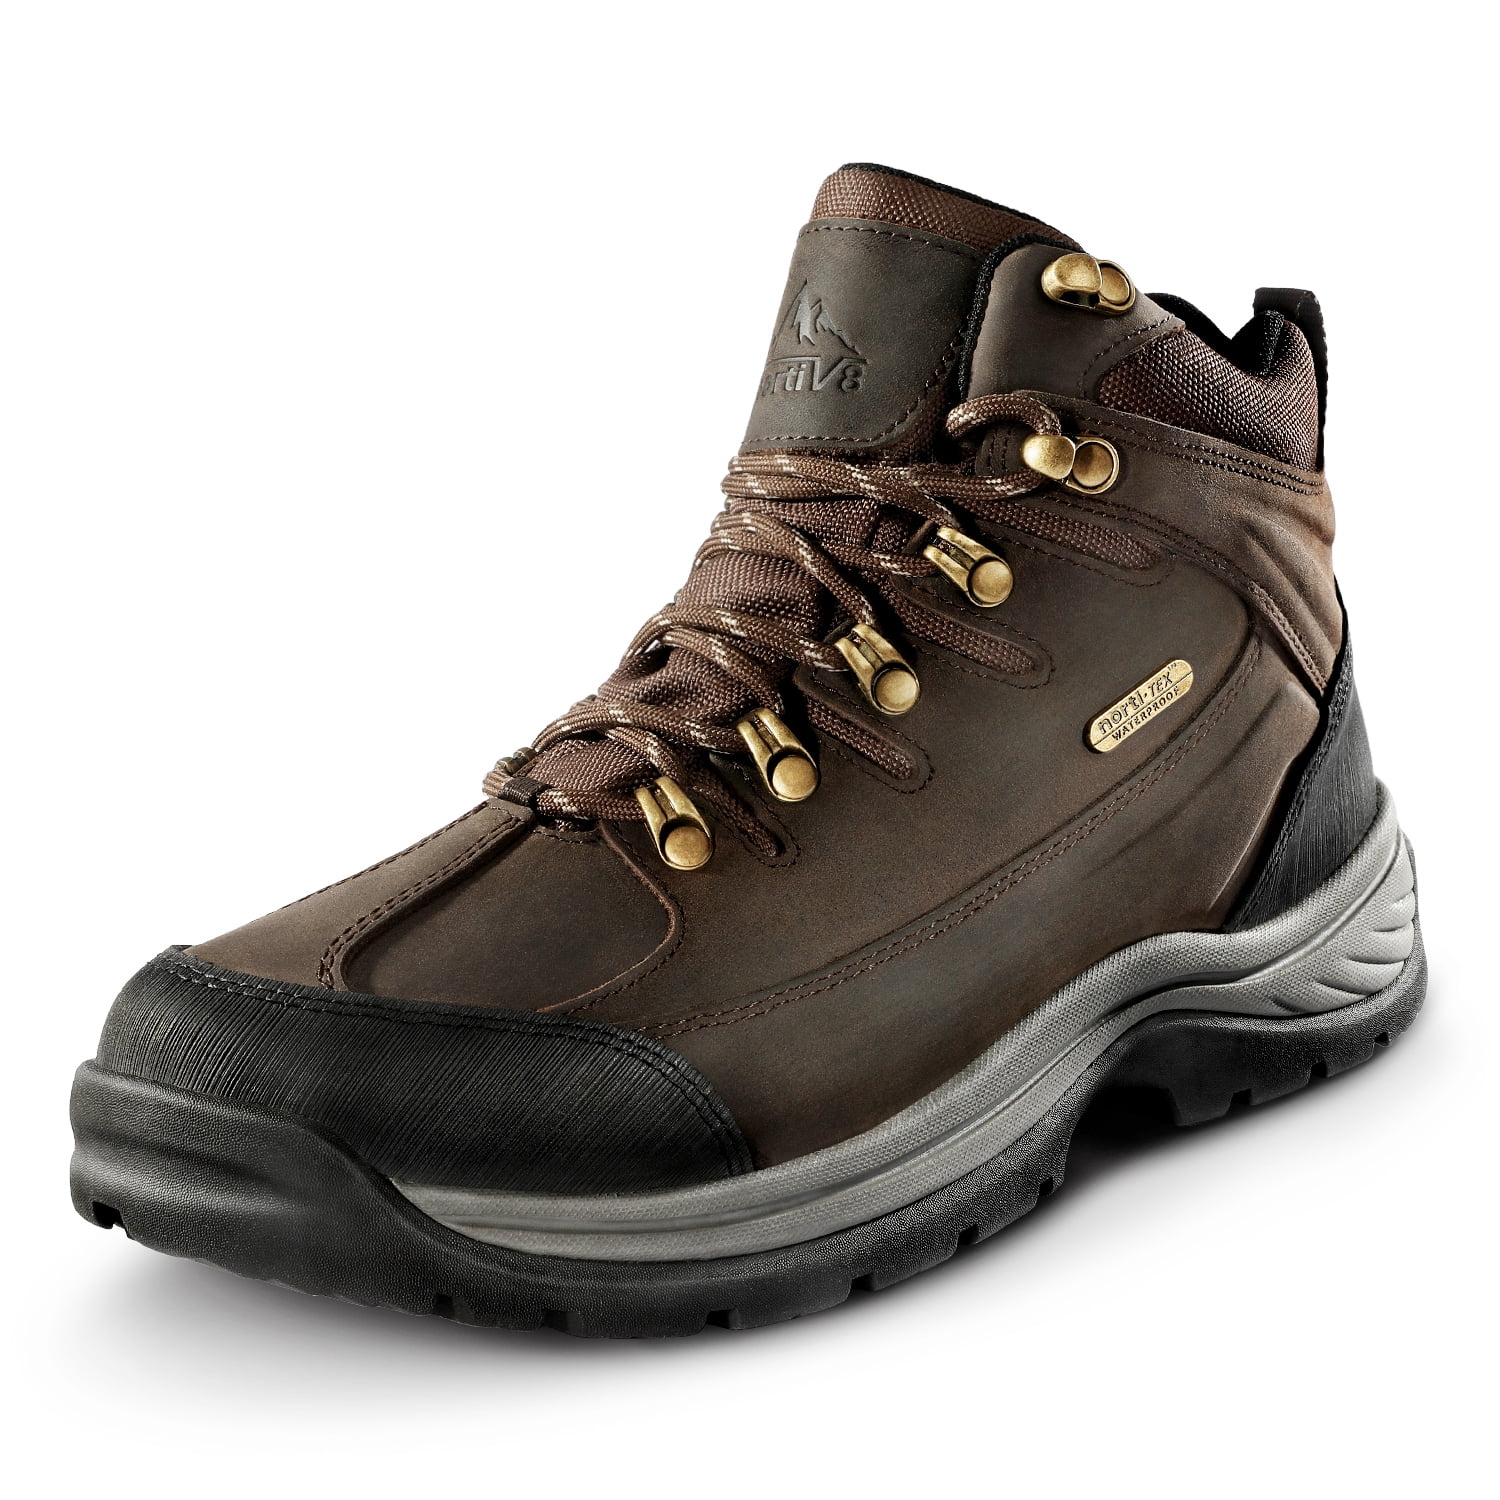 NORTIV 8 Men's Leather Waterproof Hiking Boots Mid Ankle Trekking Mountaineering Outdoor Boots Hiker